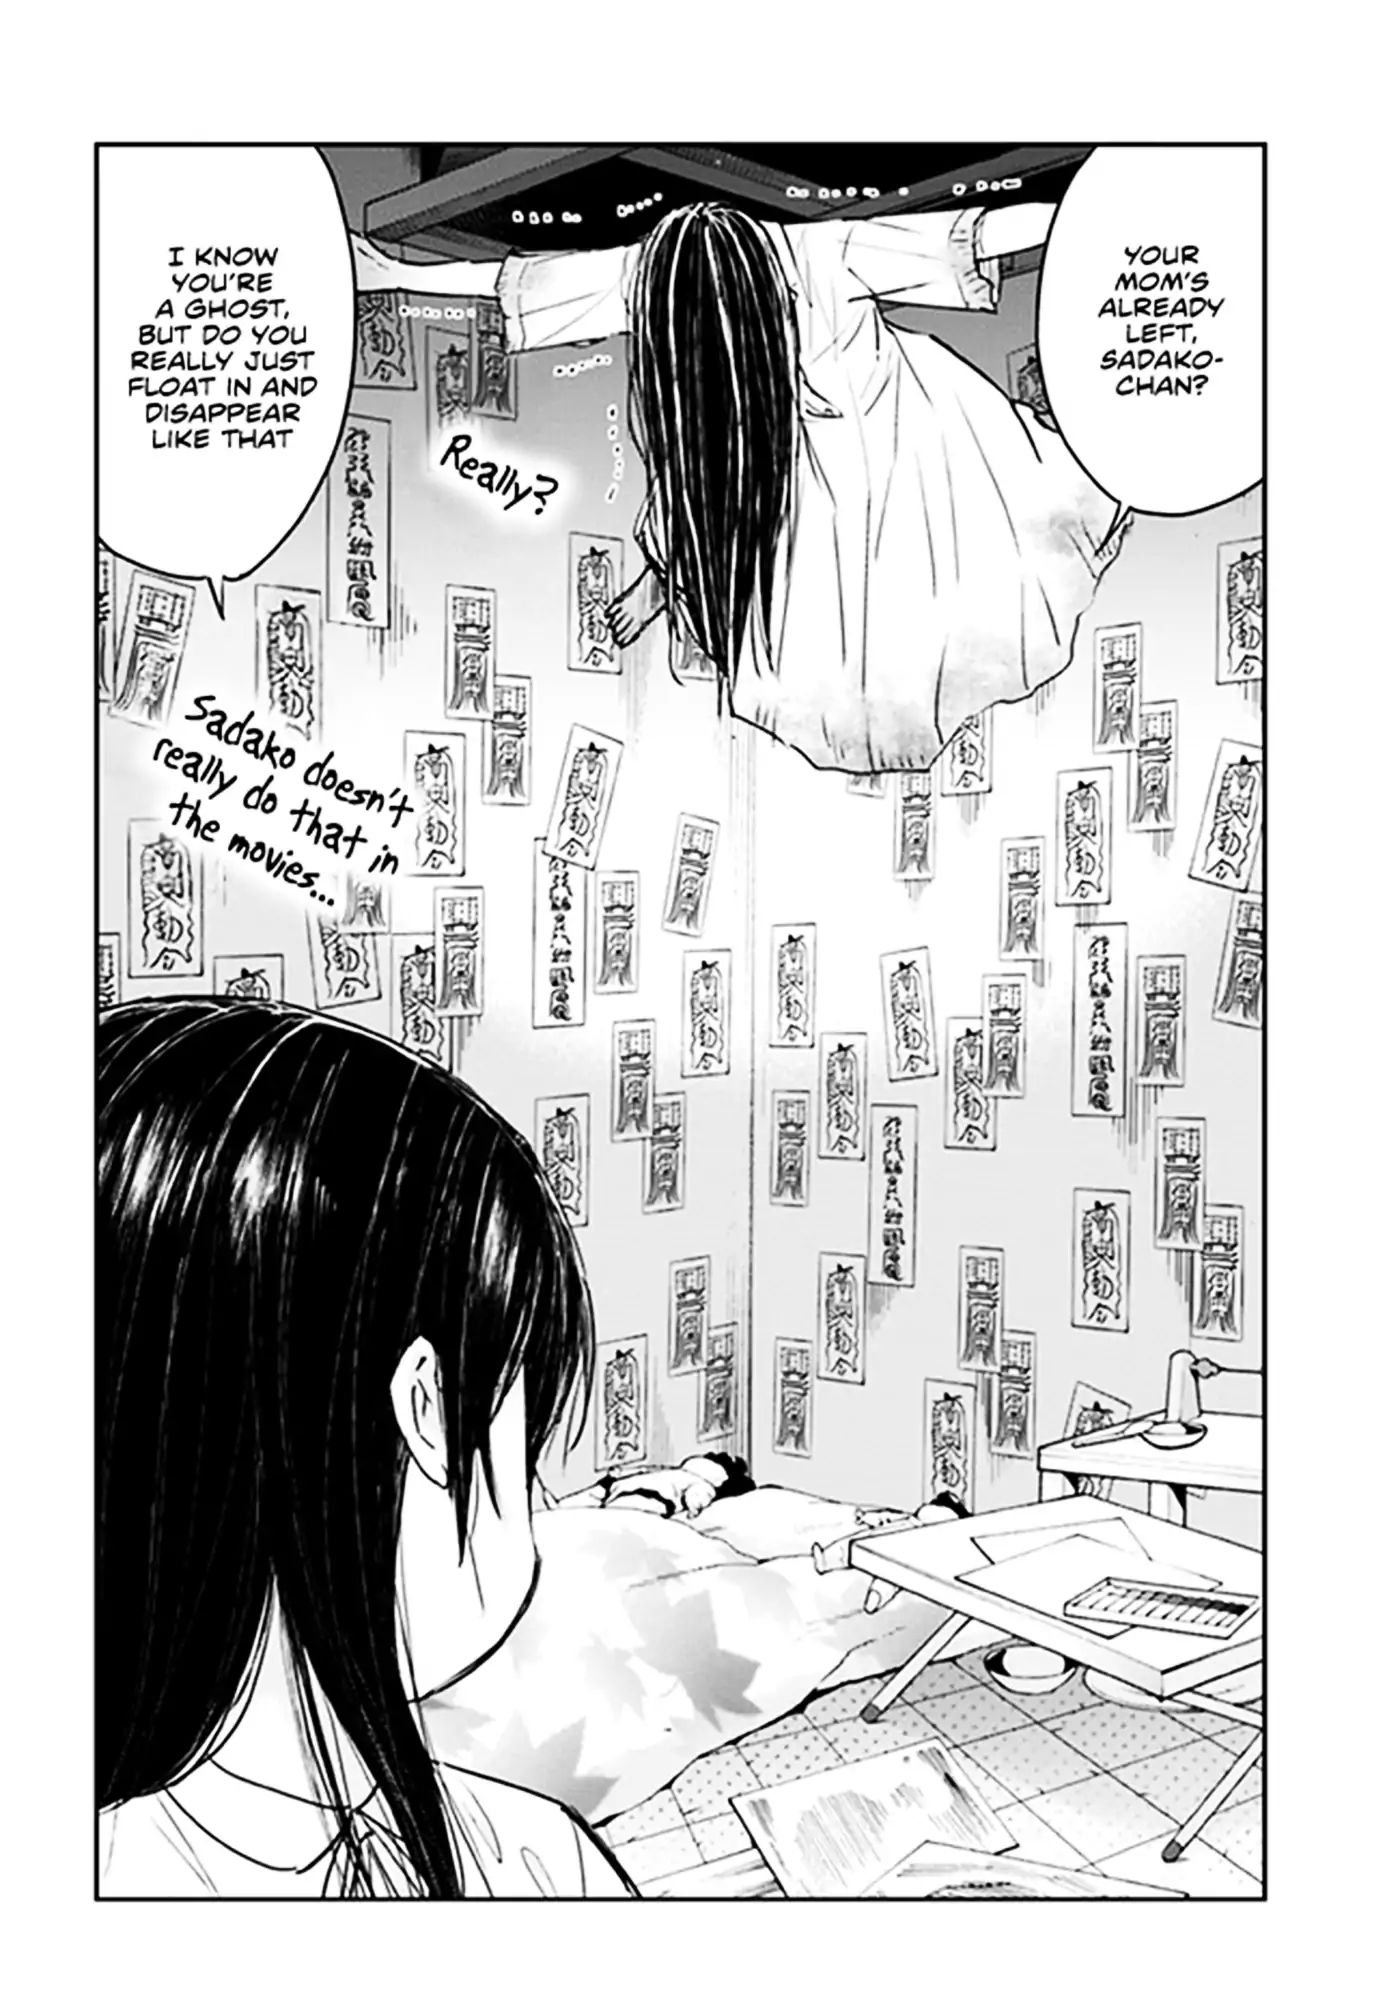 Sadako-san and Sadako-chan - chapter 4 - #2